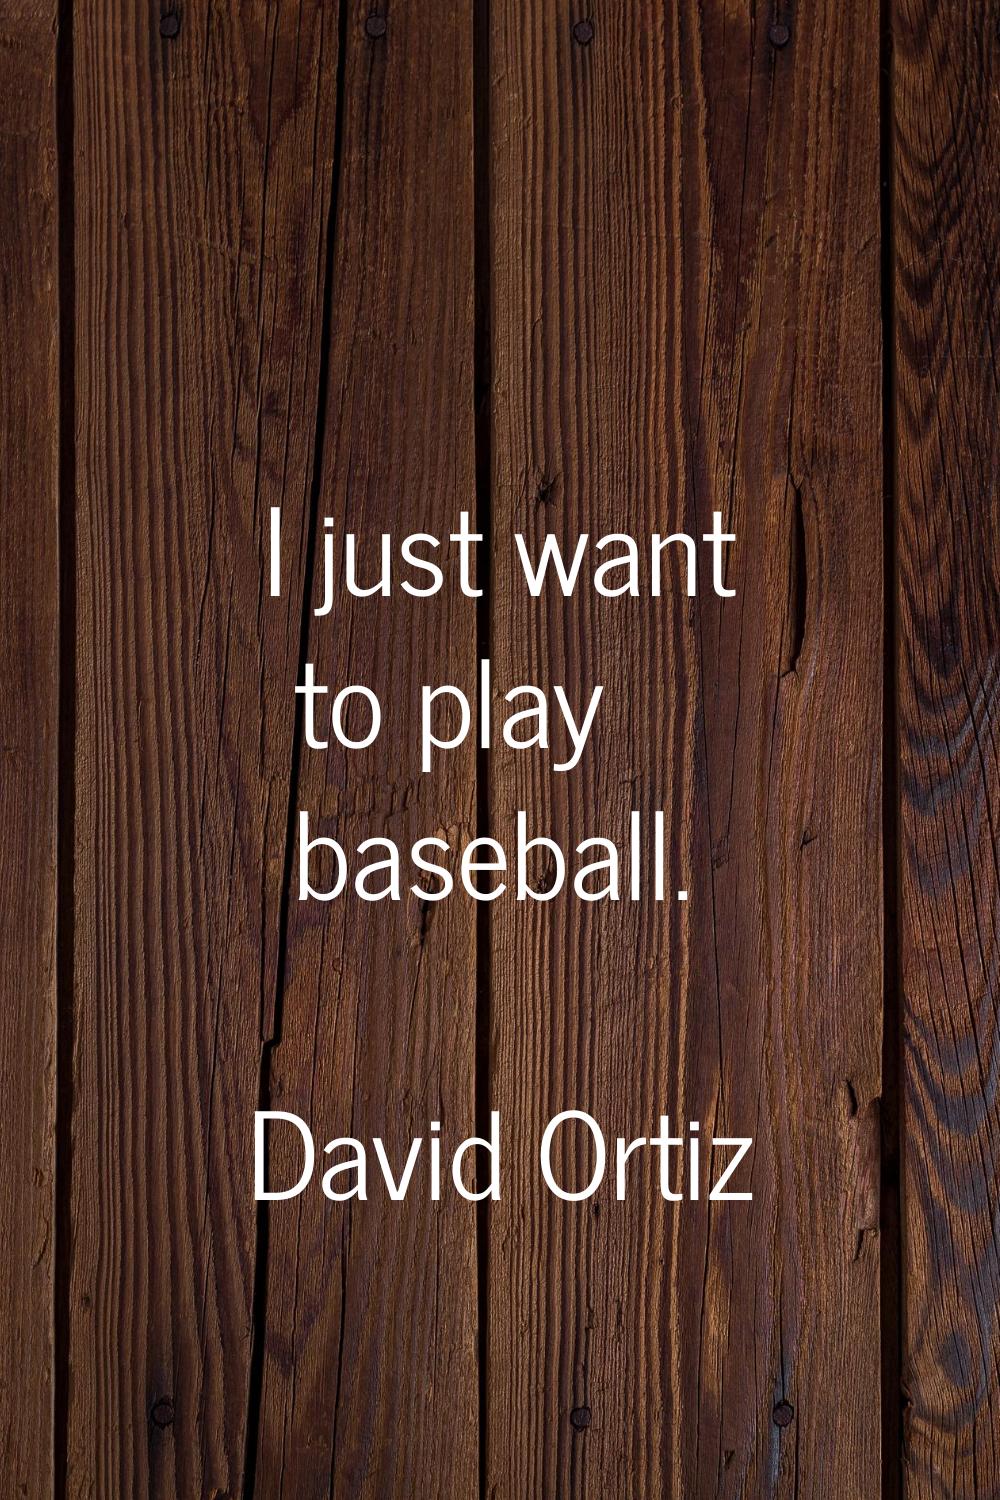 I just want to play baseball.